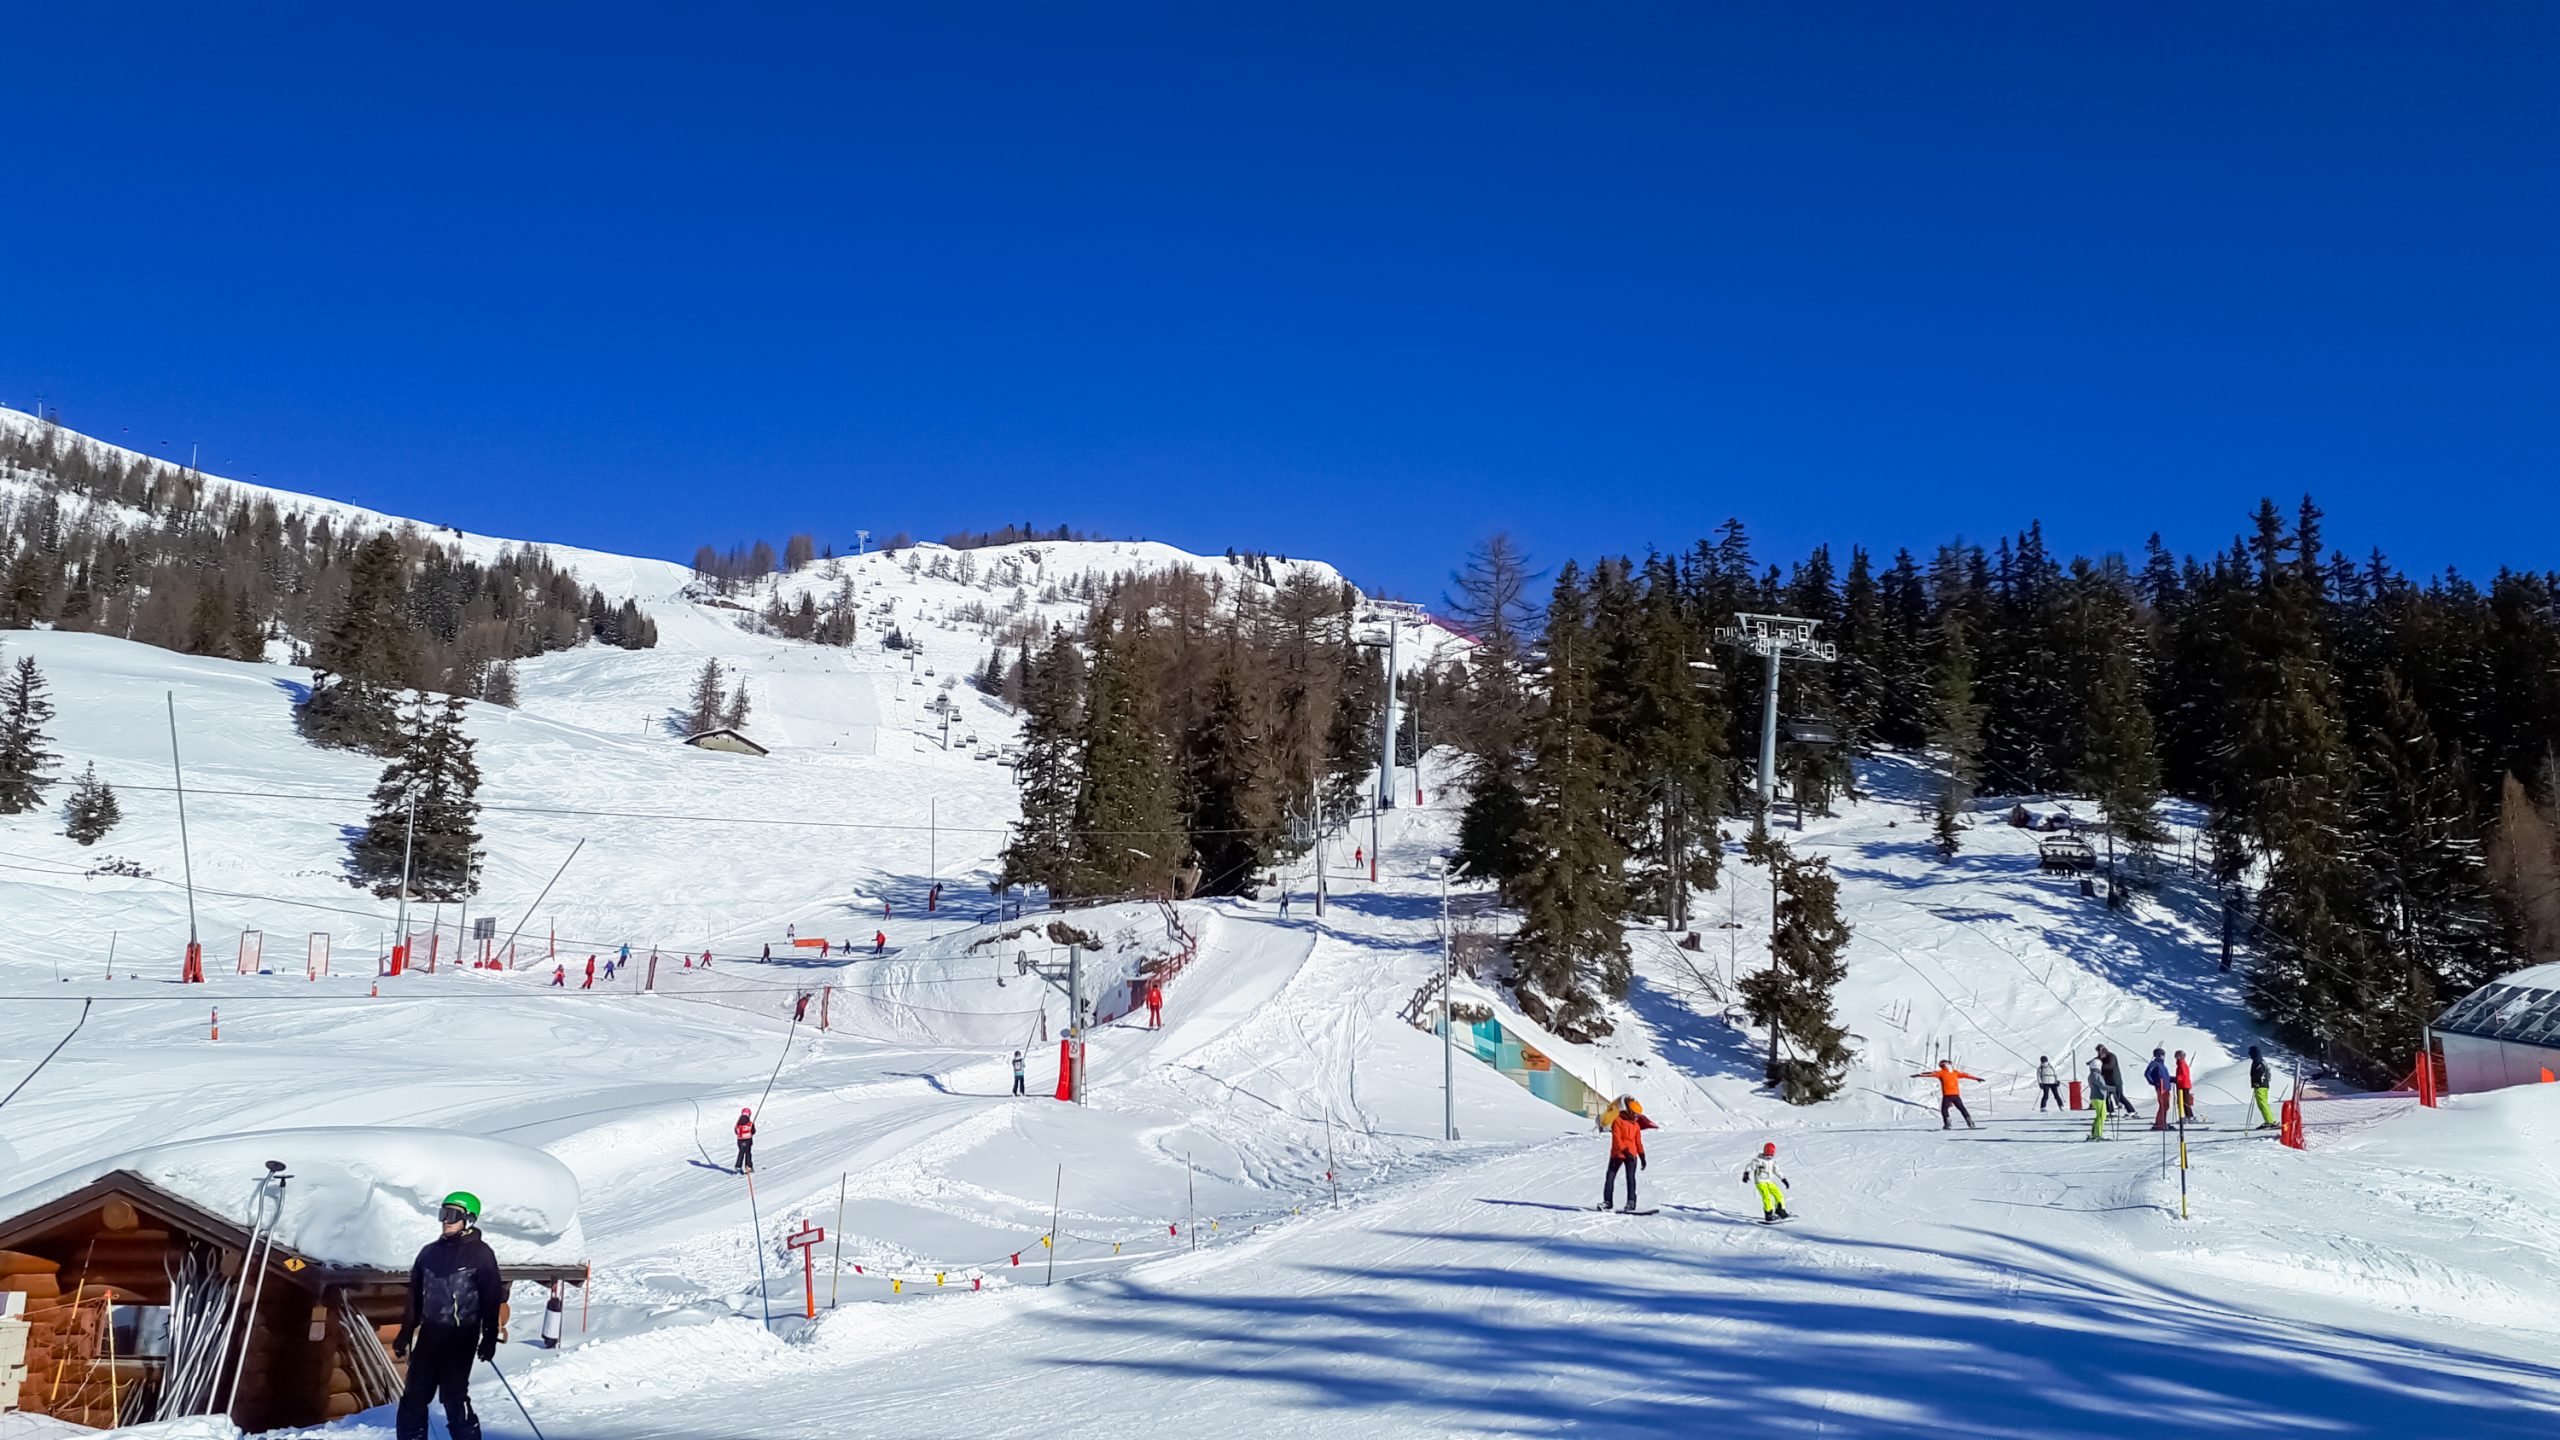 Stok narciarski, Szwajcaria, fot. Andrus Ciprian, Shutterstock